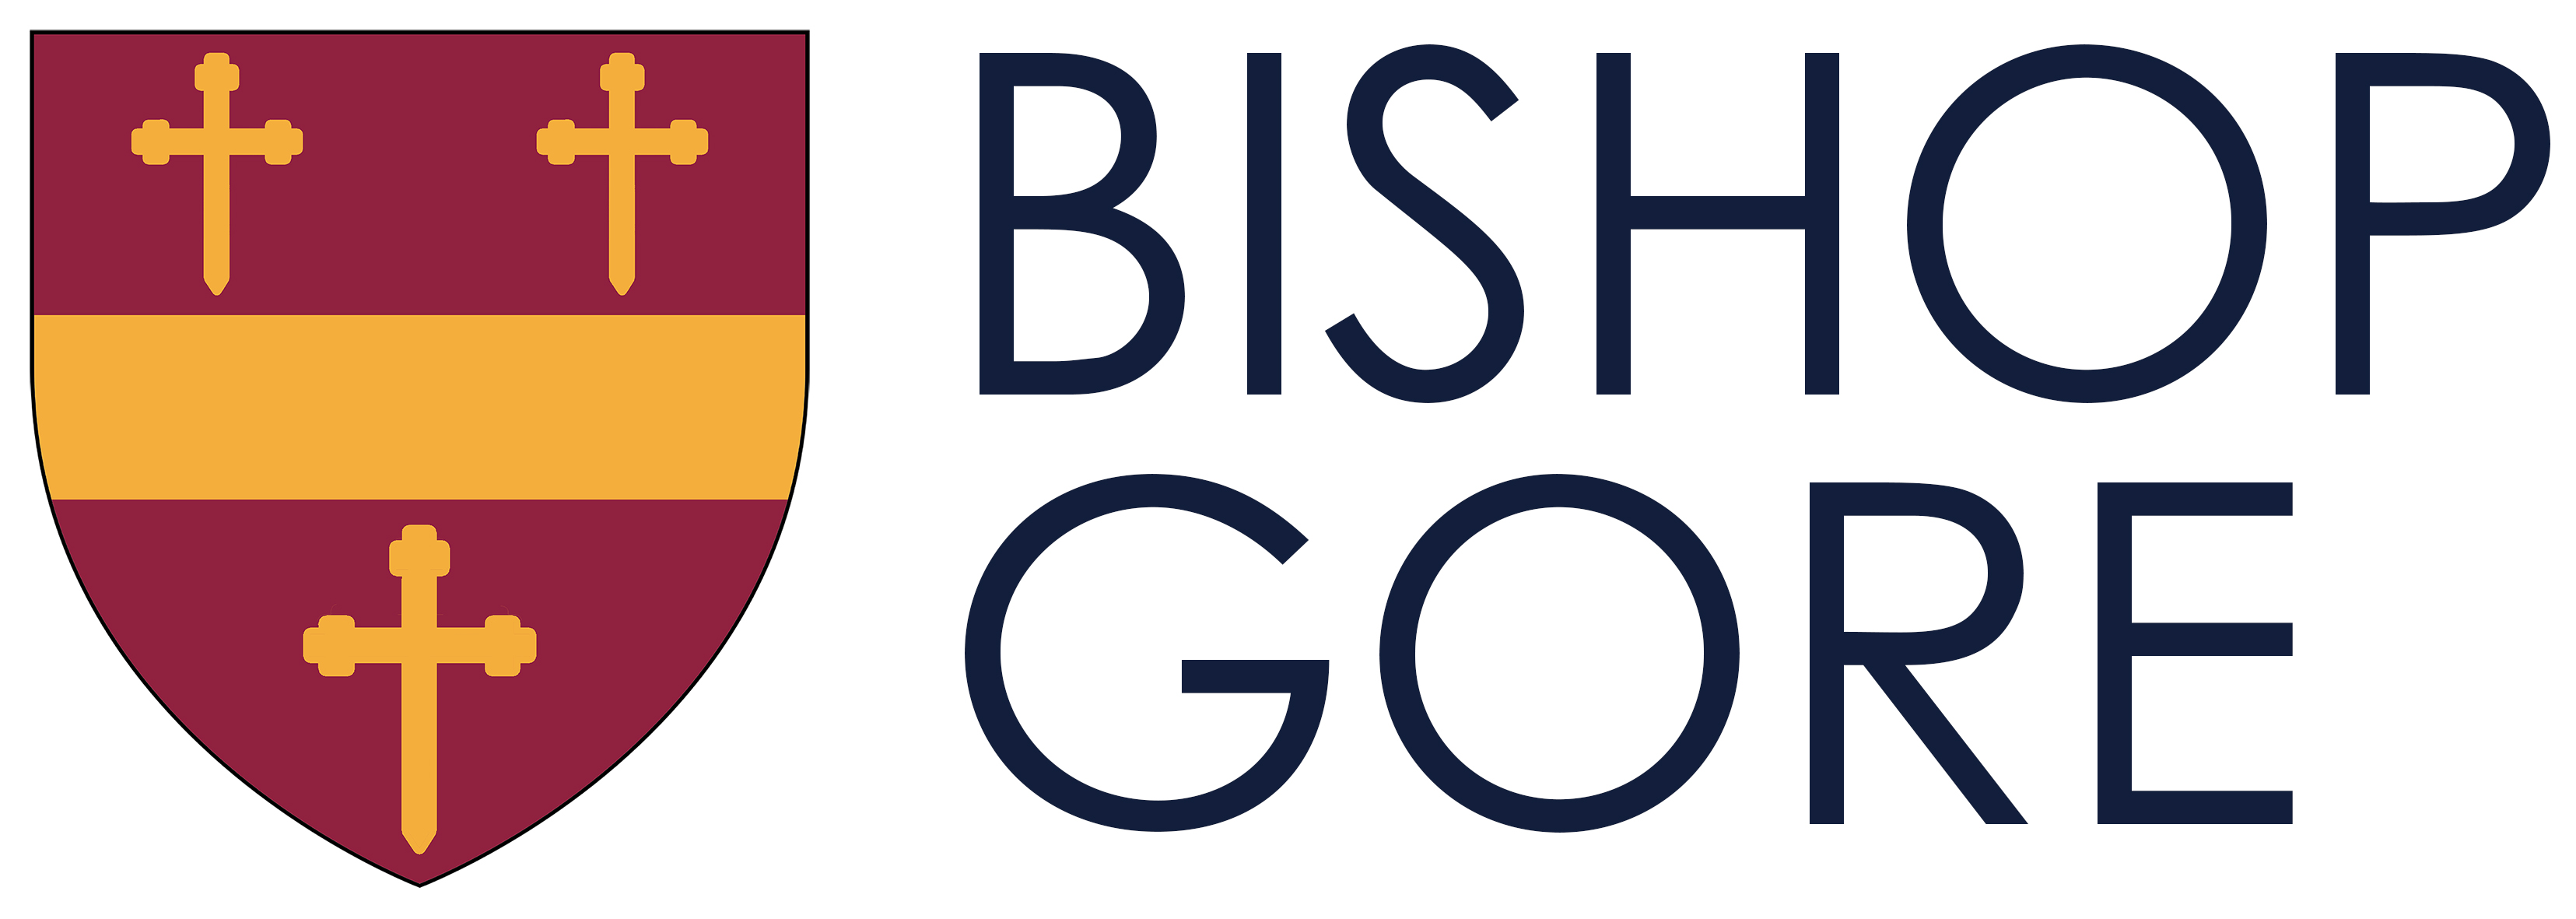 Bishop Gore School